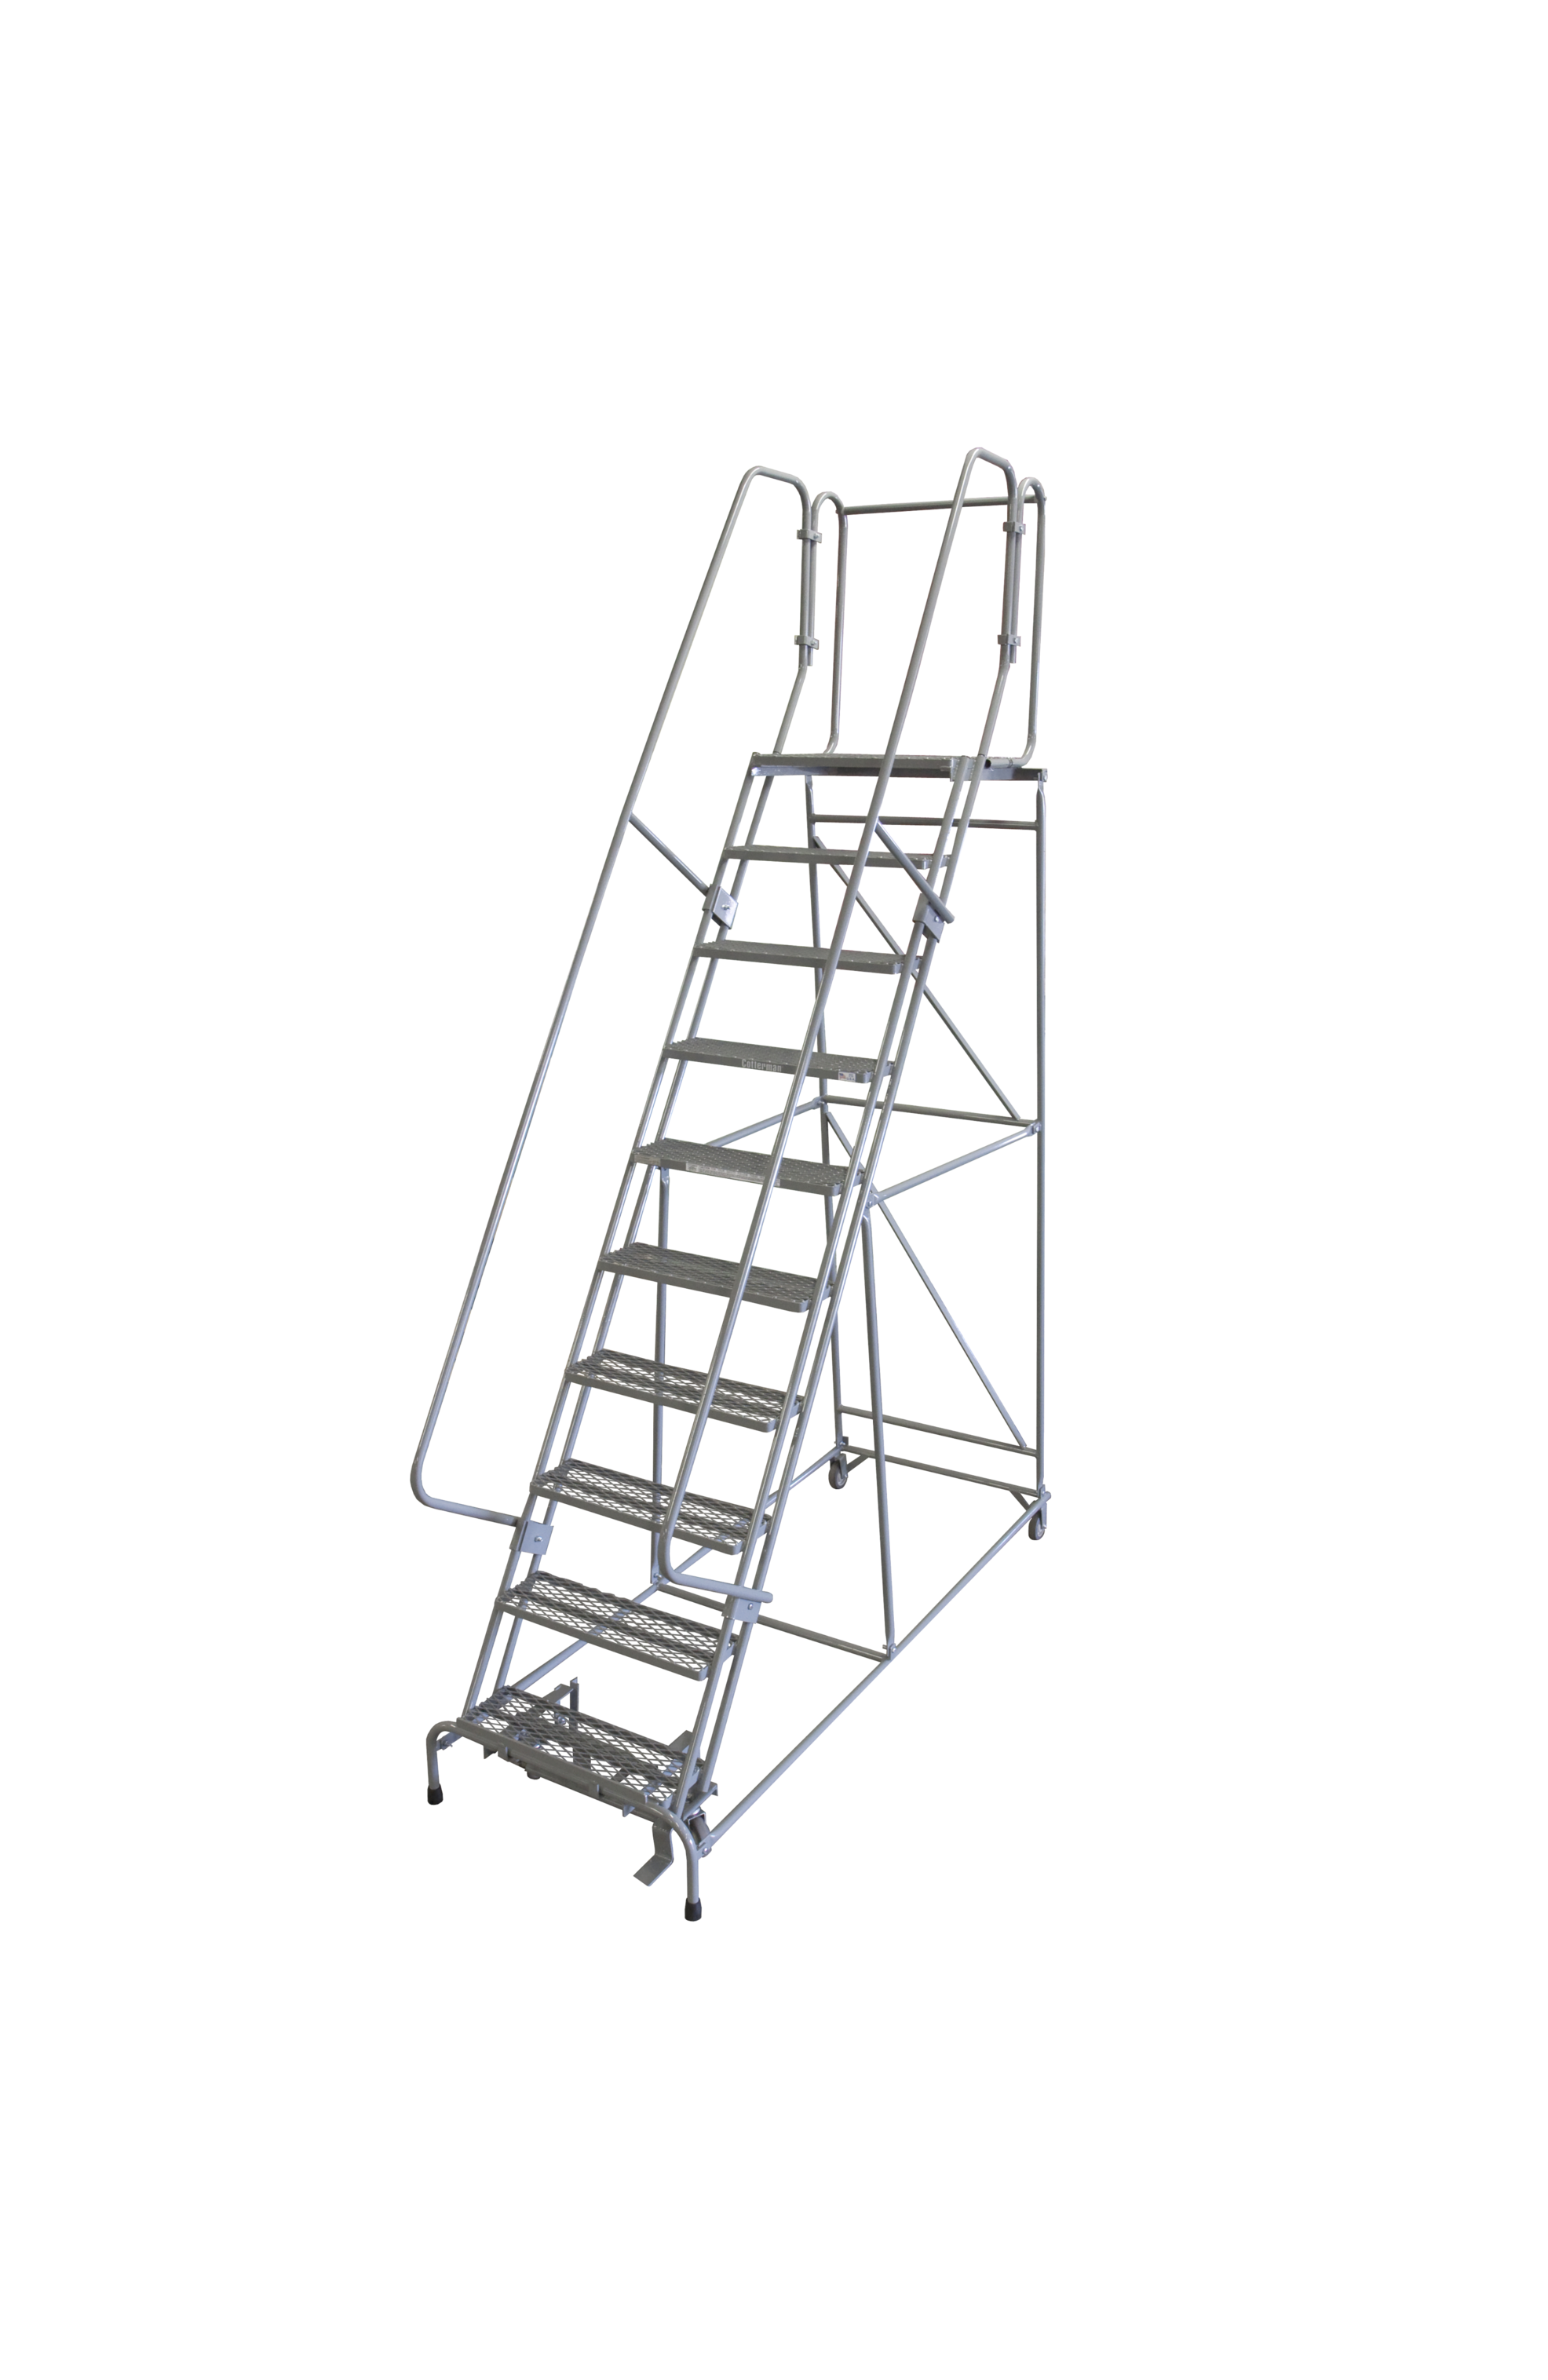 https://rackandshelf.com/wp-content/uploads/1500-Series-Cotterman-Rolling-Ladder-Feature-Pic-1.png